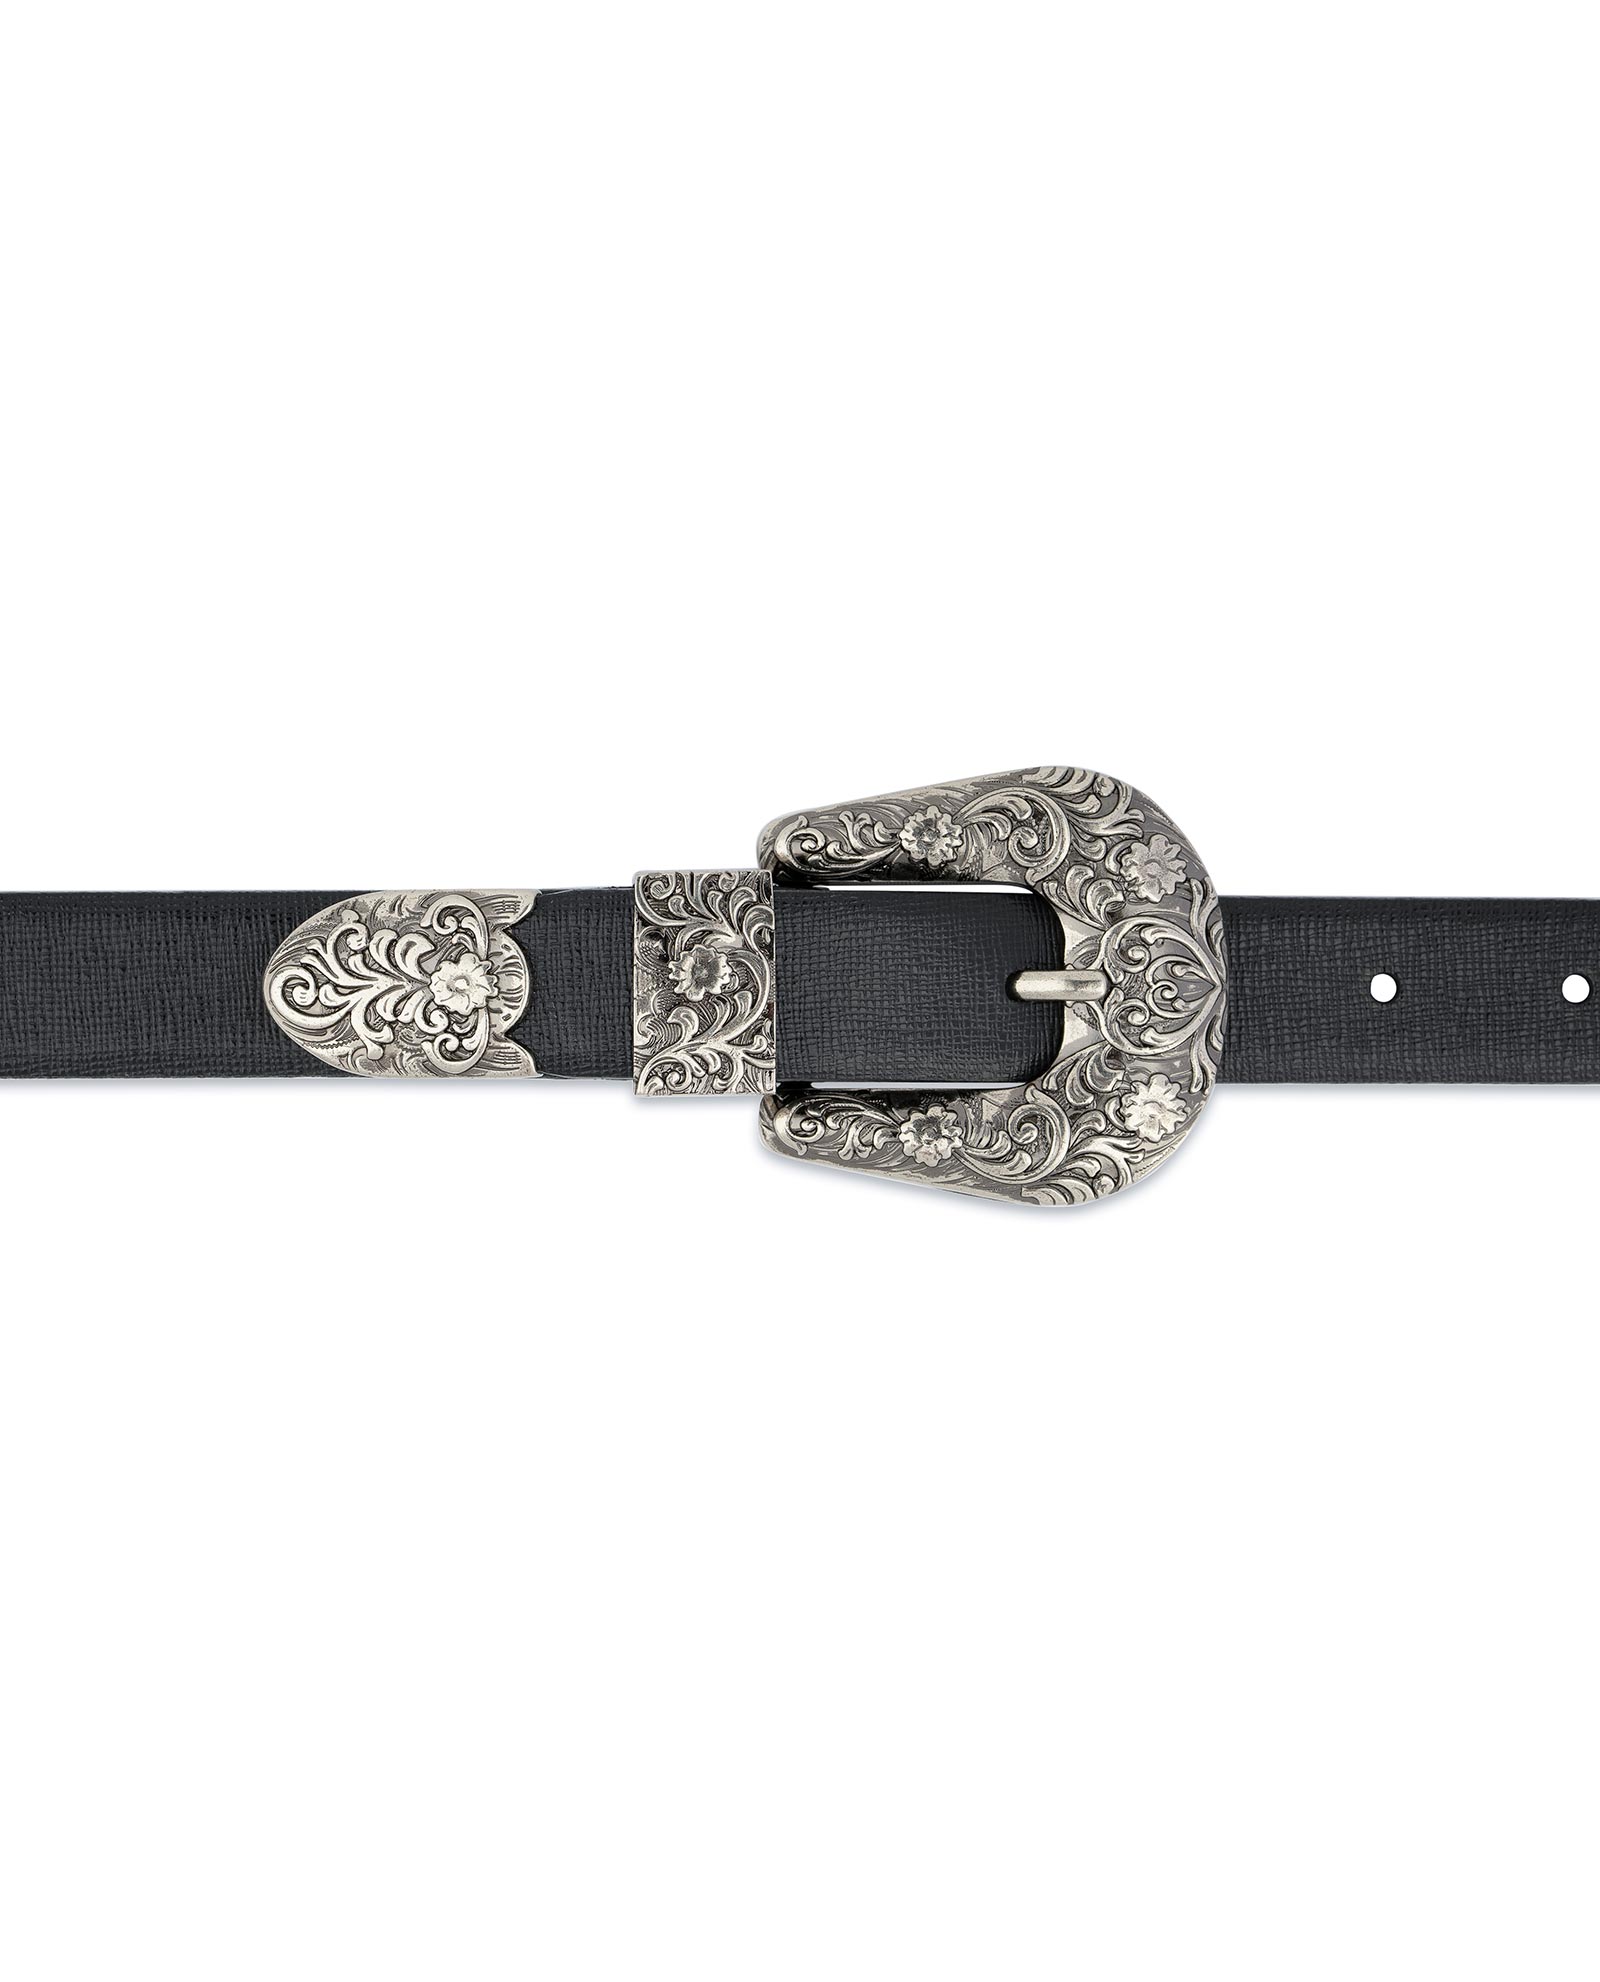 Buy Black Women's Belts For Dresses | Saffiano Leather | Capo Pelle